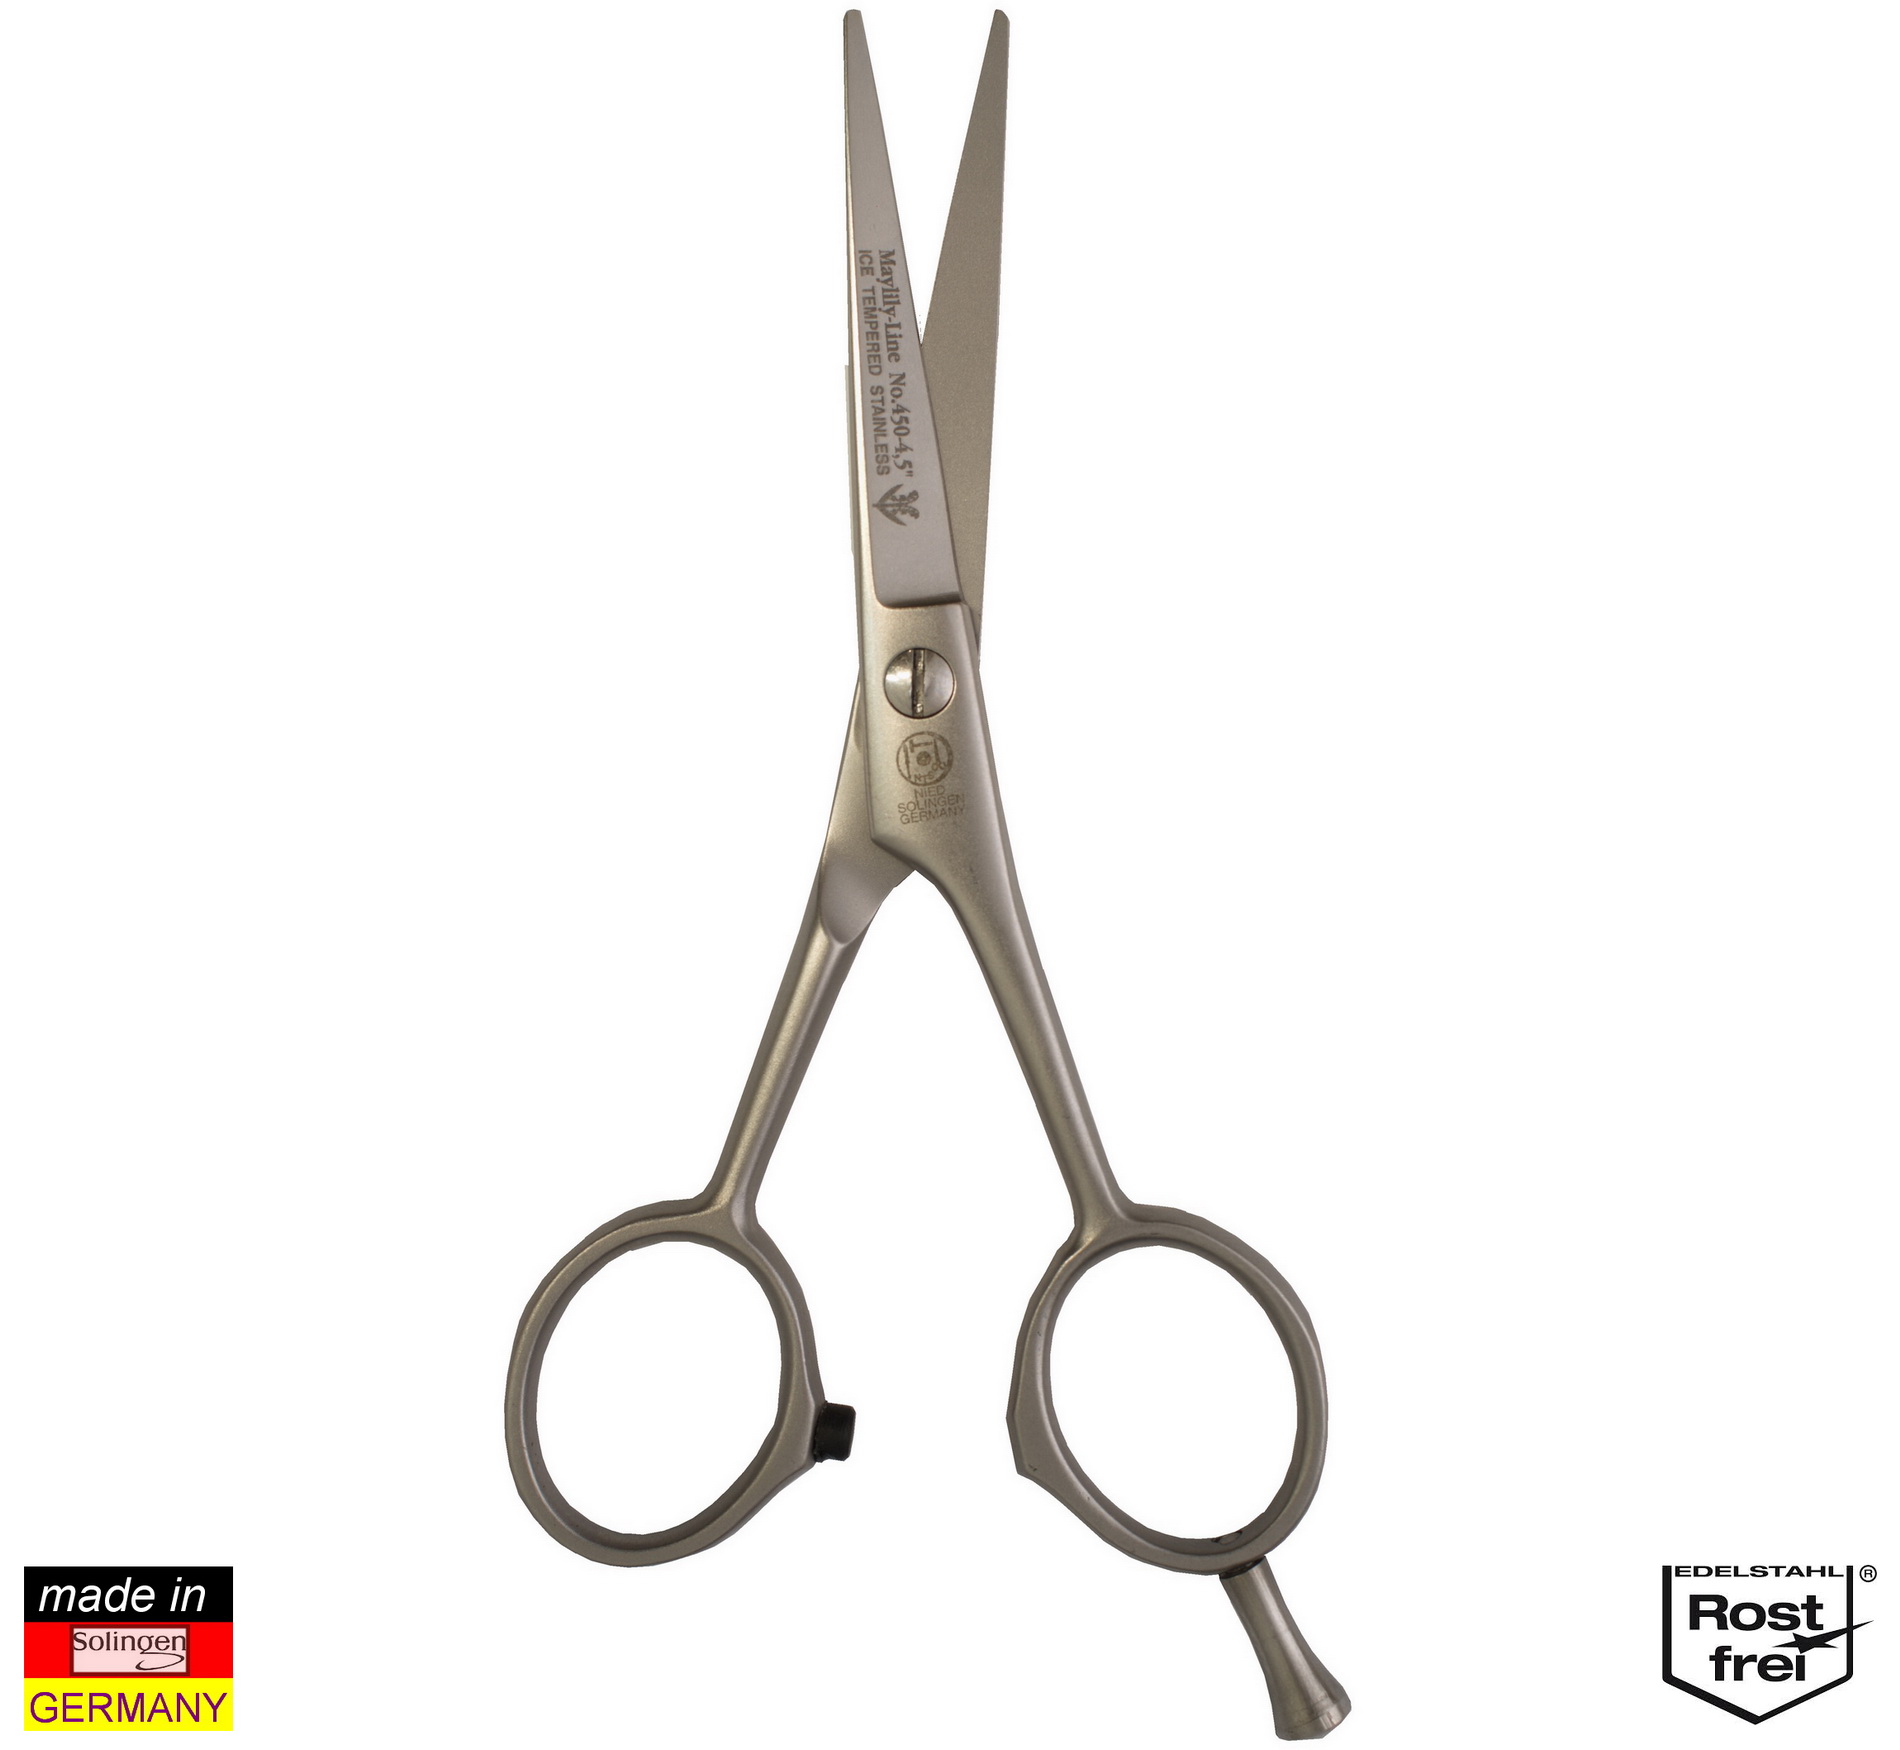 Details about   Kretzer Household Scissors 10" Finny No 79225 Made Solingen/Germany 